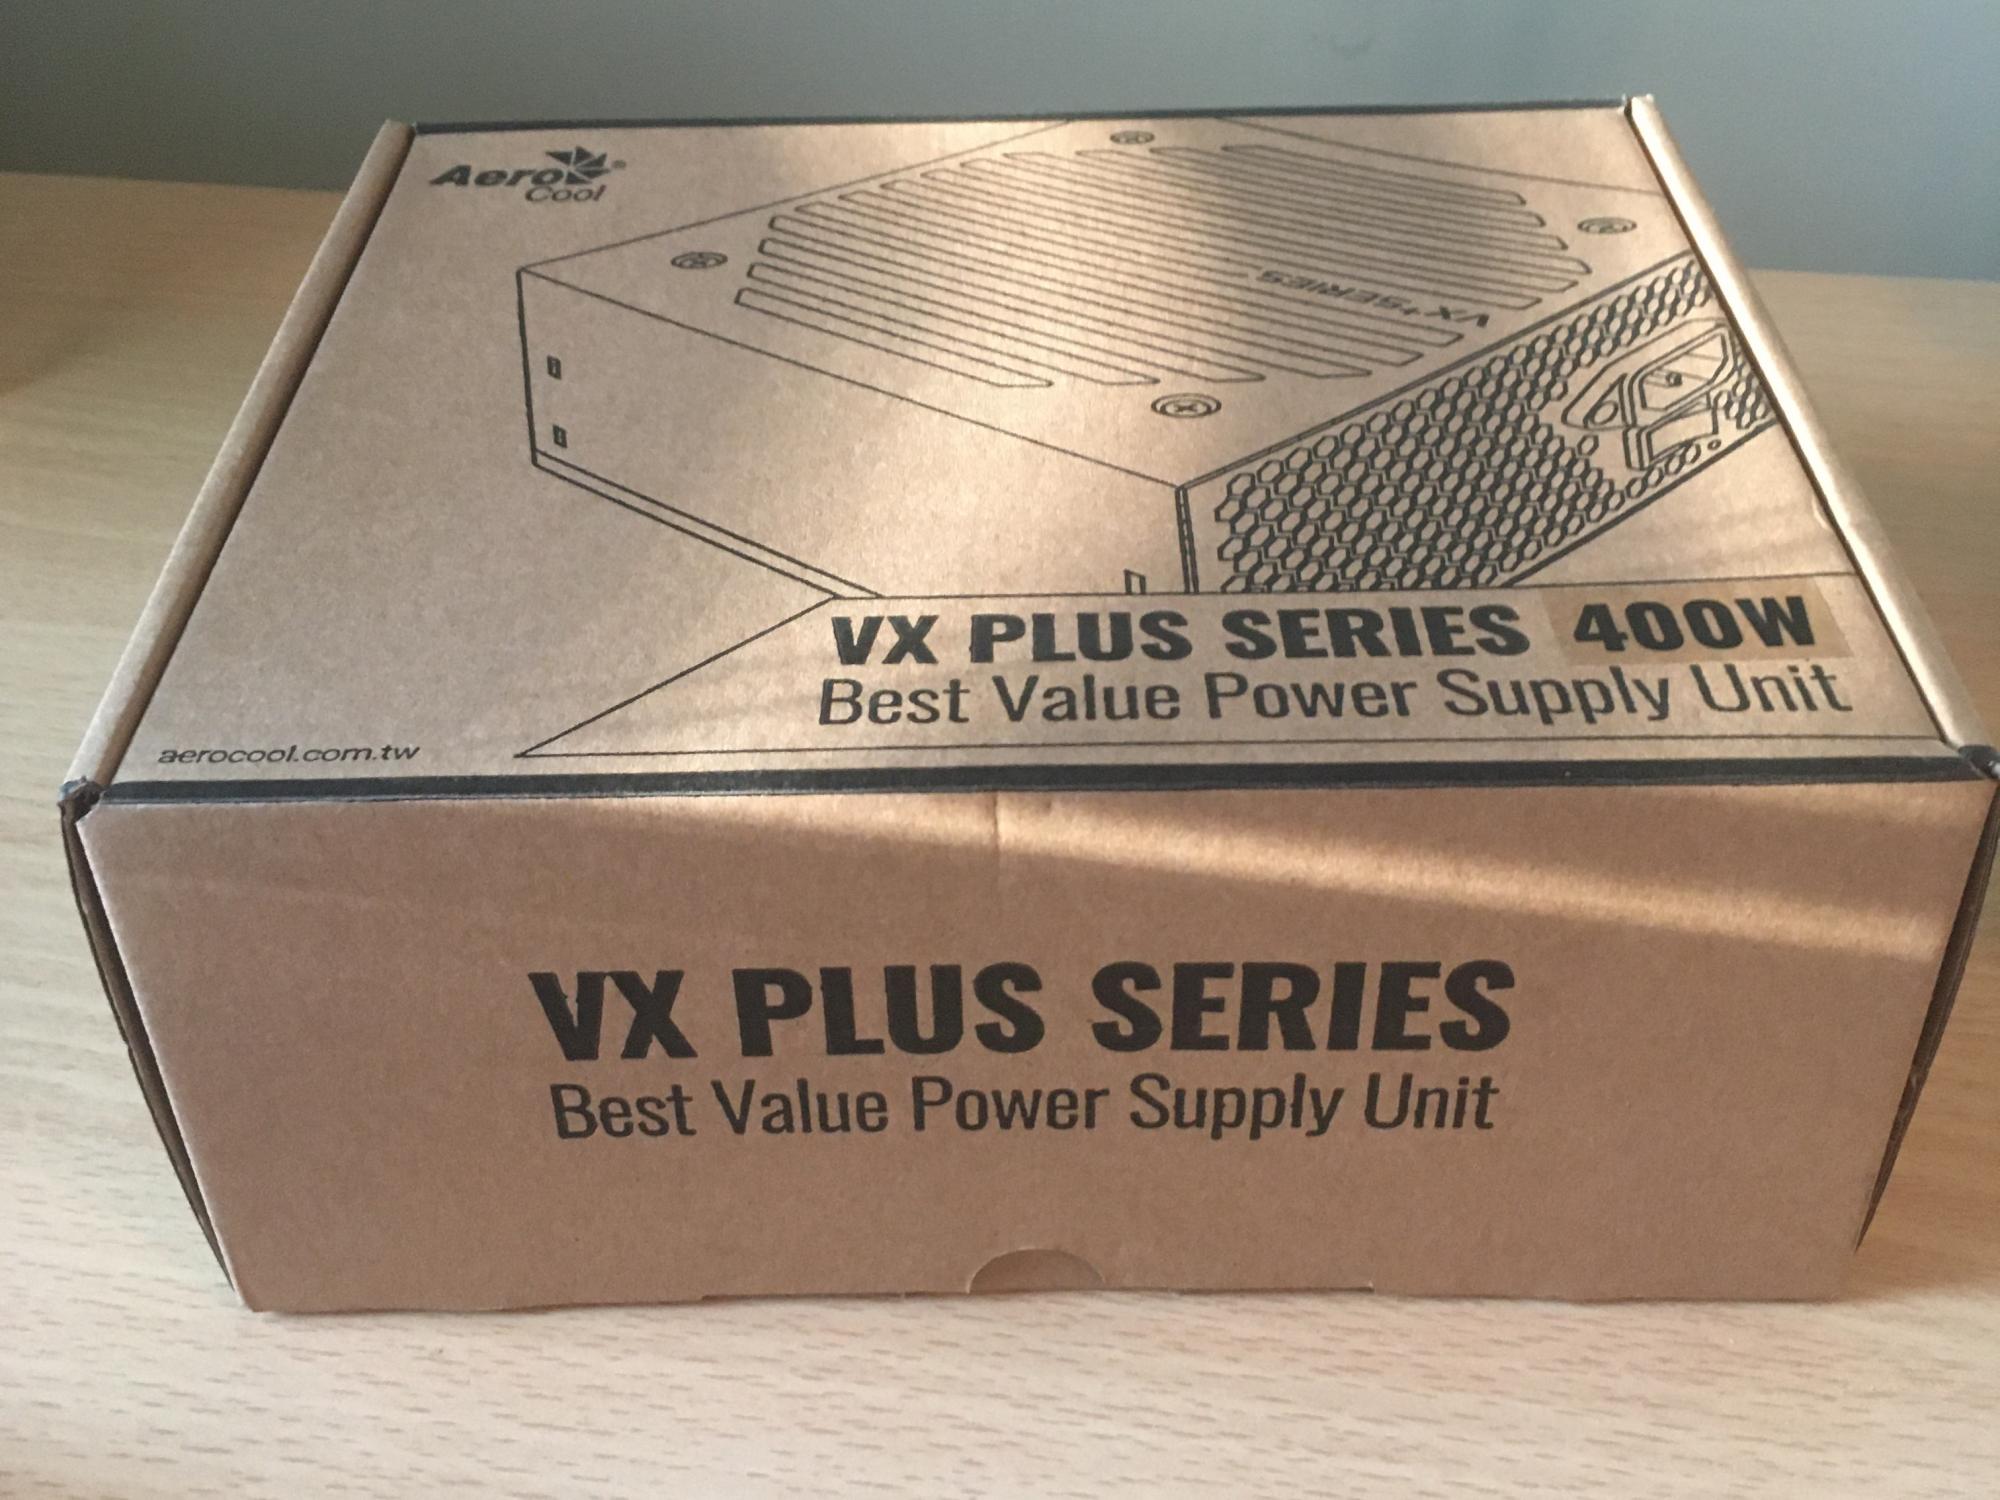 VX Plus Series 400w. RB-s500hq7-0. Power Plus at Series Pack. Vx plus series